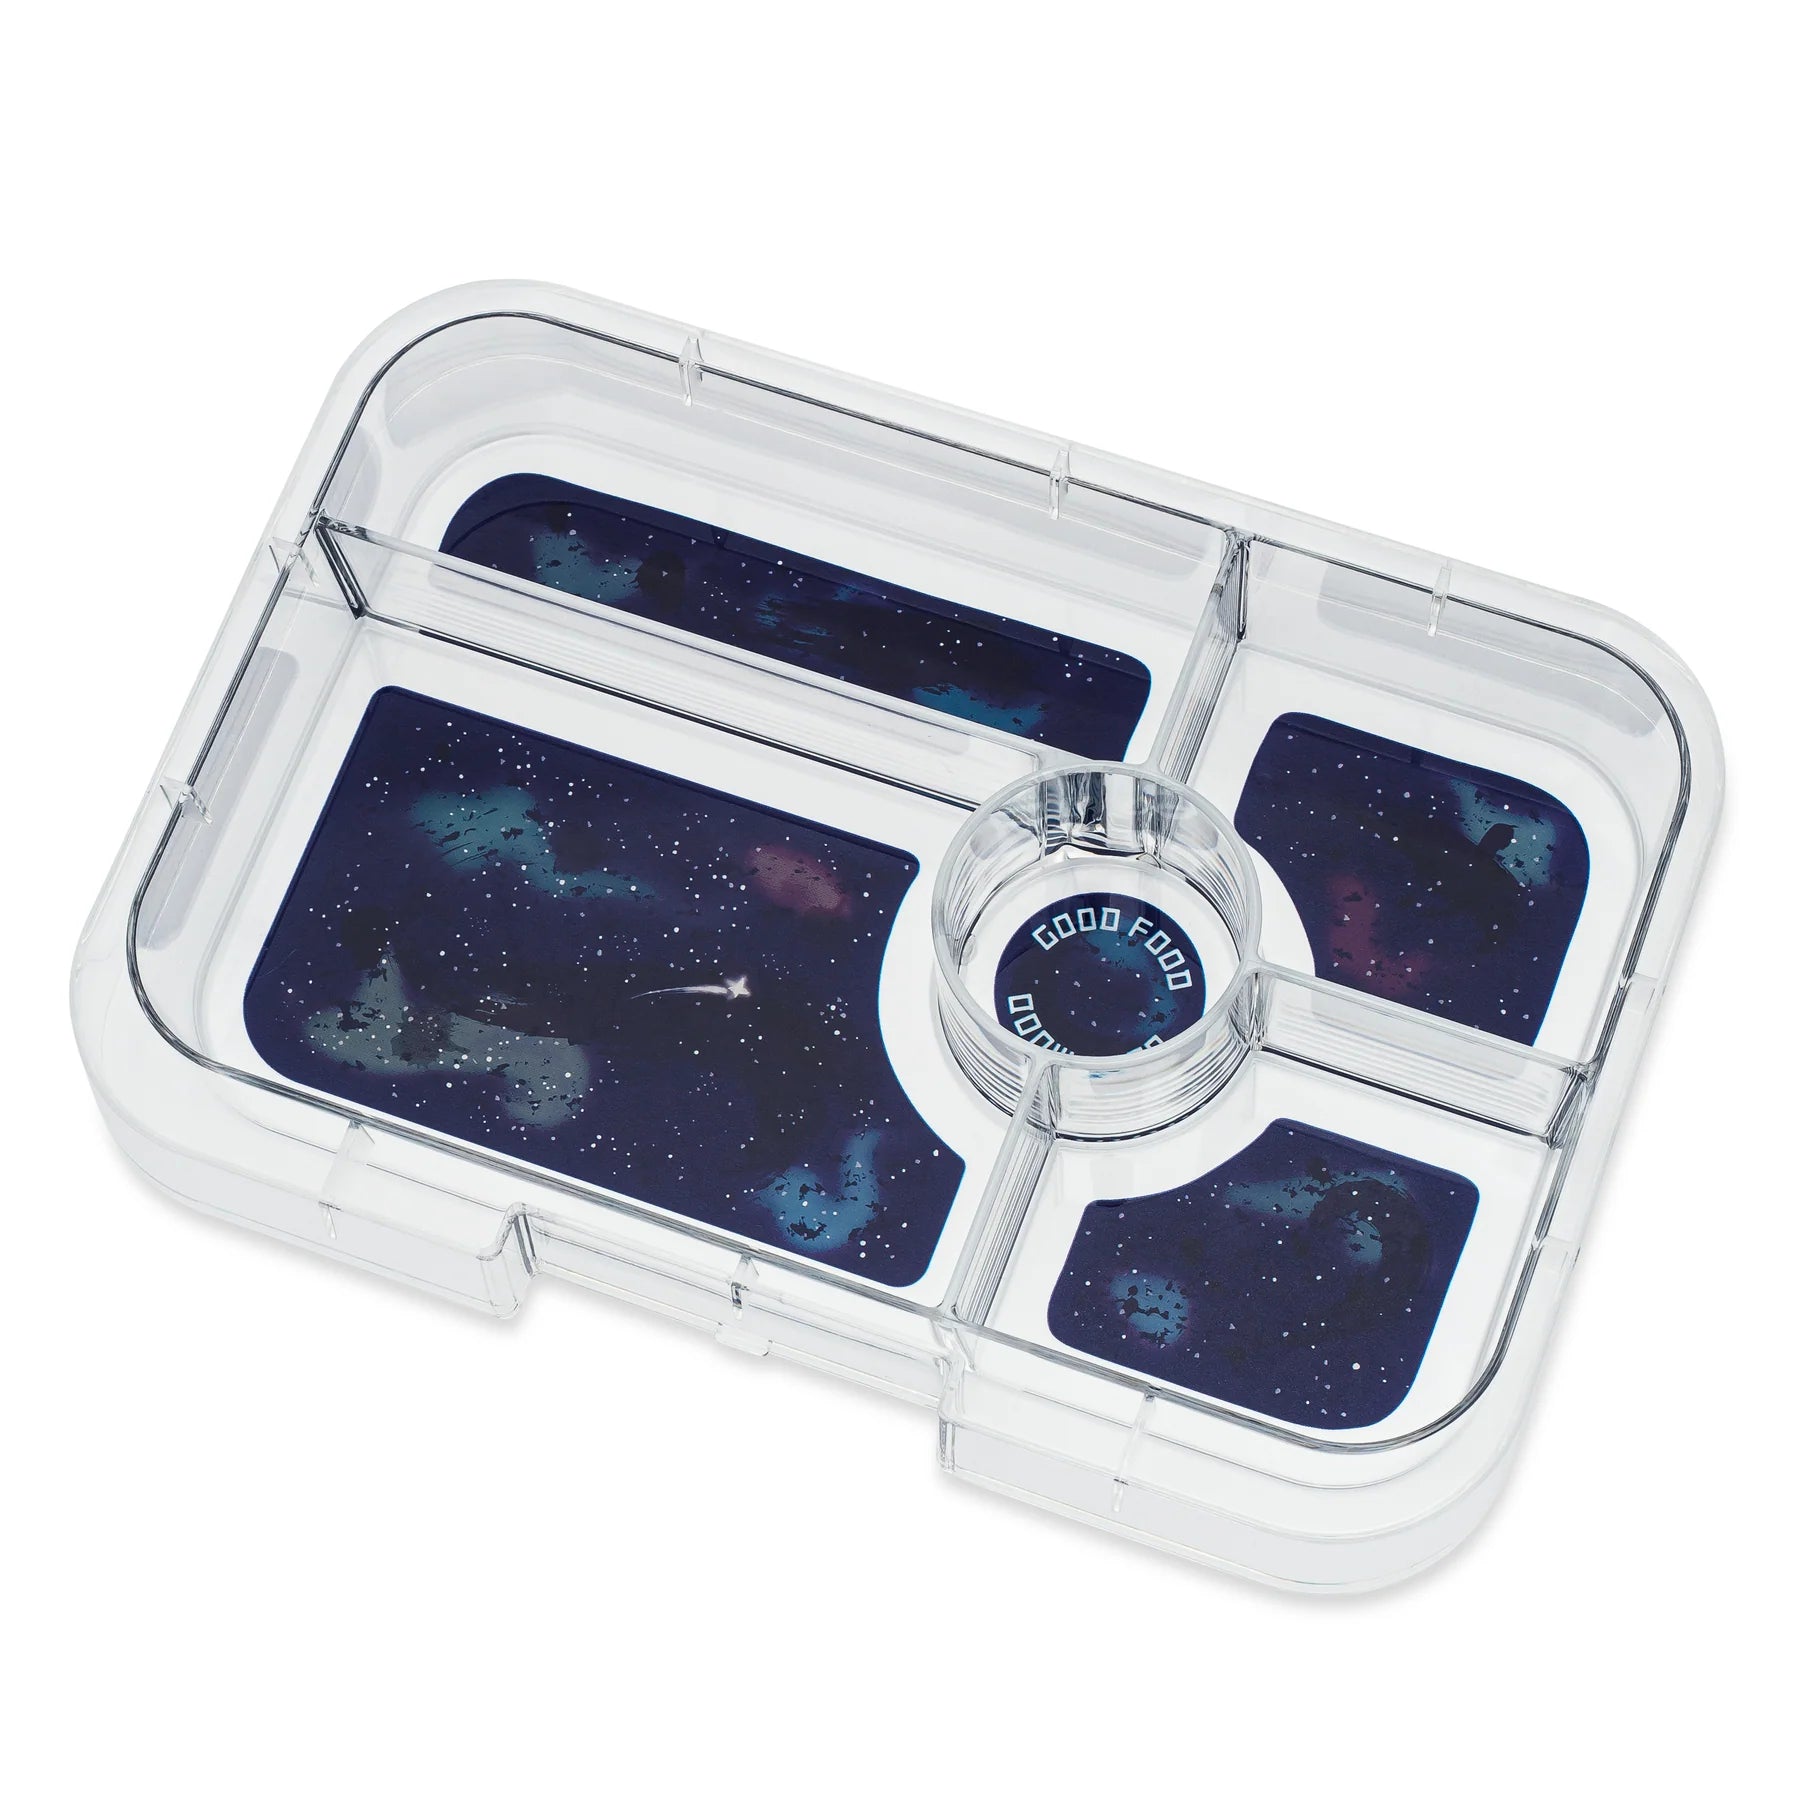 Yumbox Tapas 5-Compartment Food Tray - Bali Aqua/Space Galaxy 3